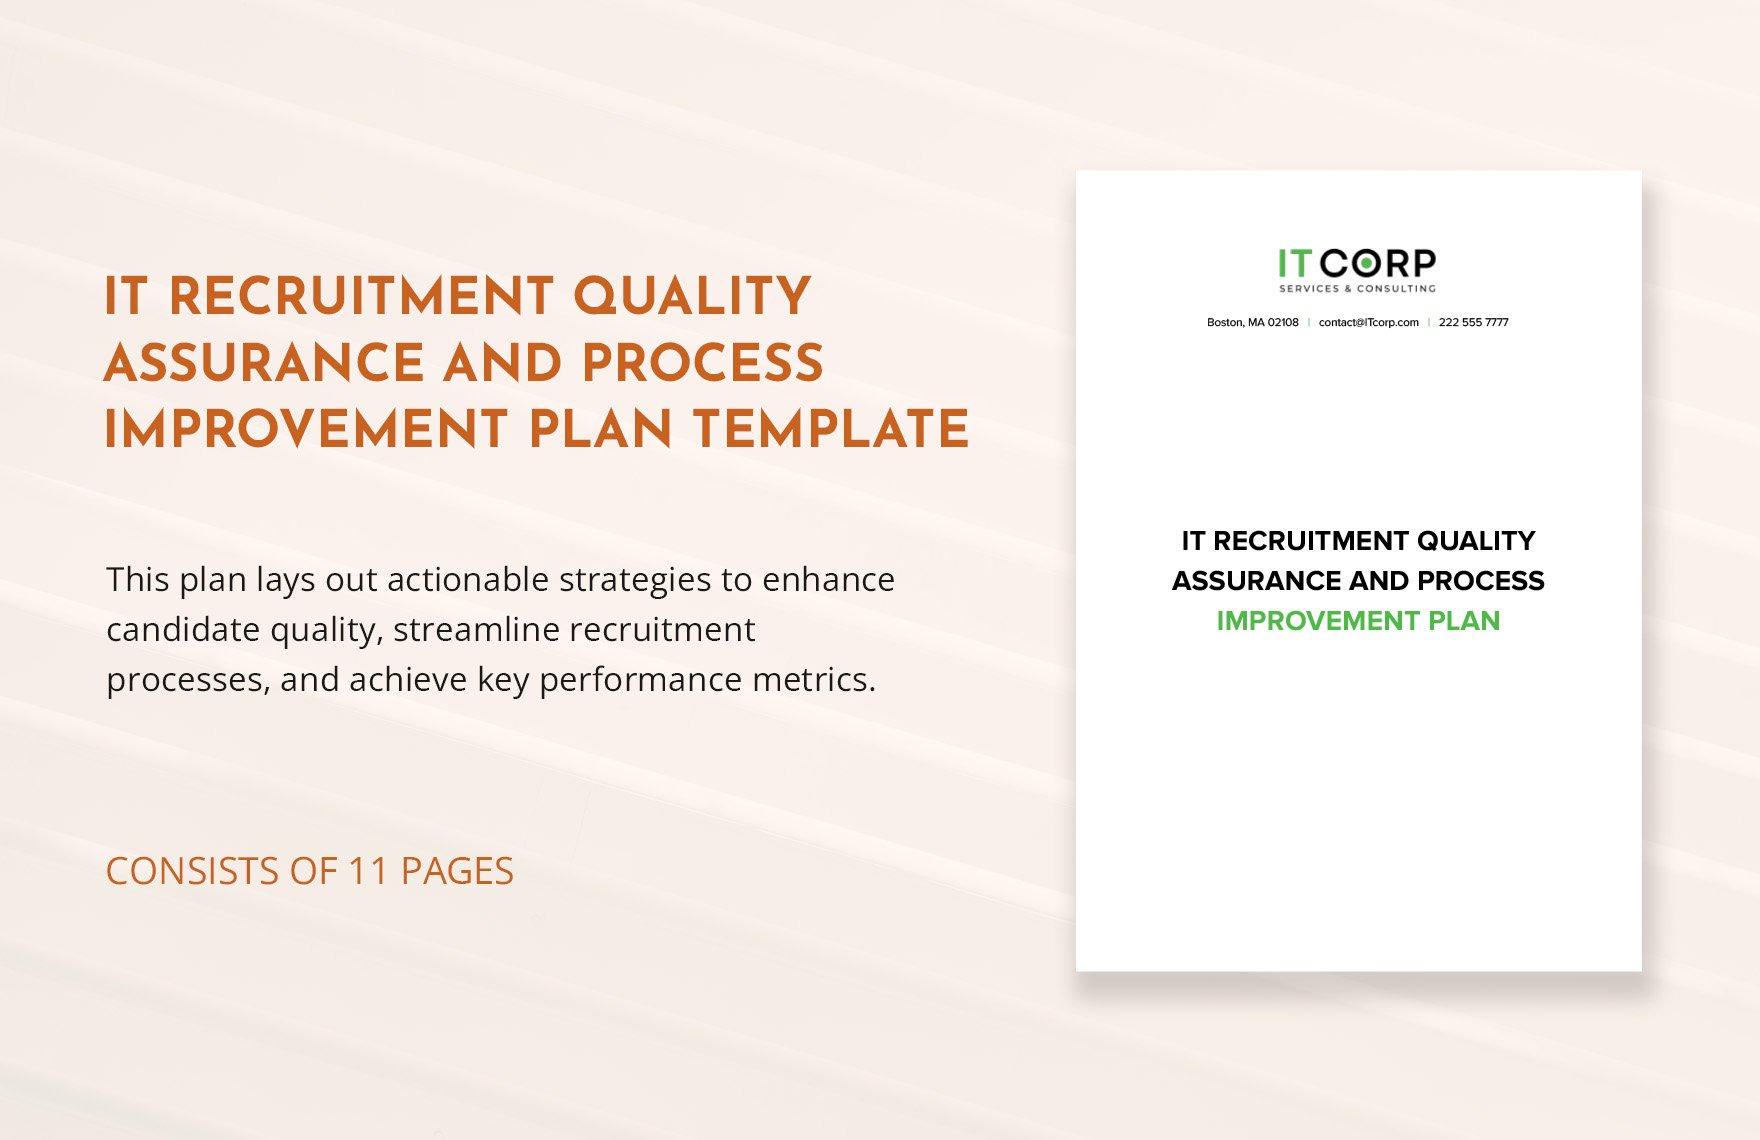 IT Recruitment Quality Assurance and Process Improvement Plan Template